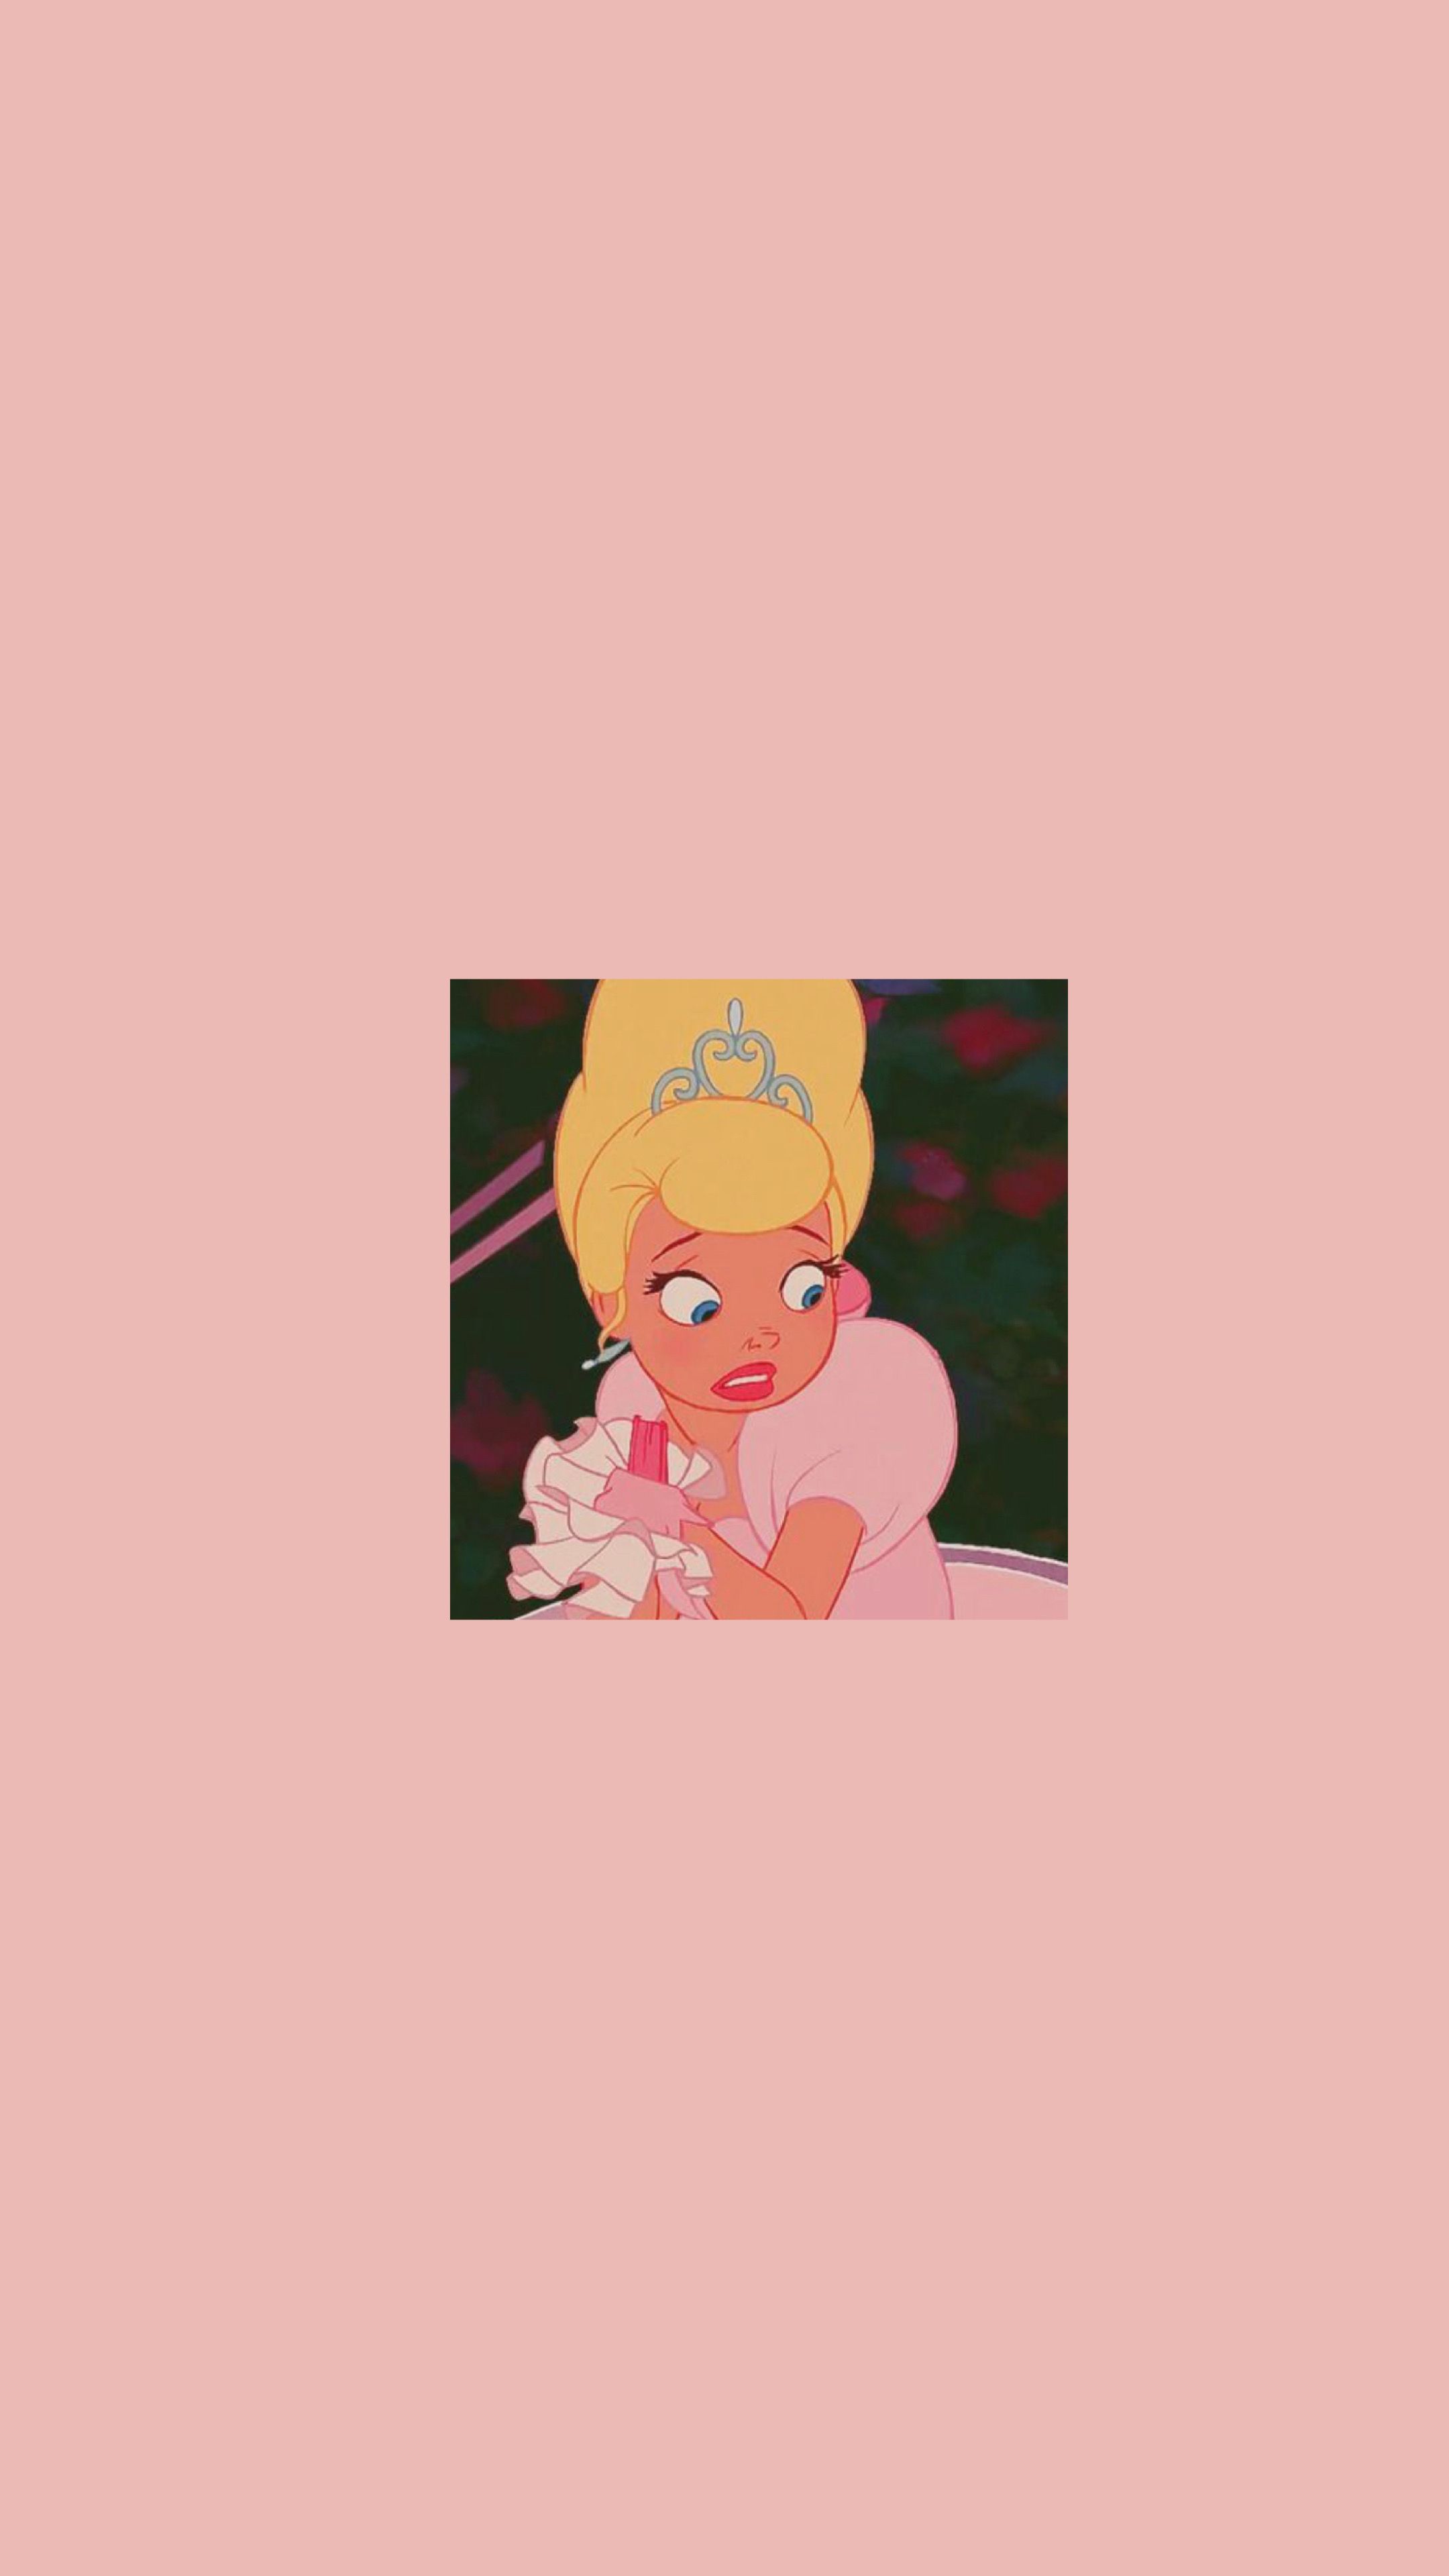 Cinderella in a pink dress - Disney, princess